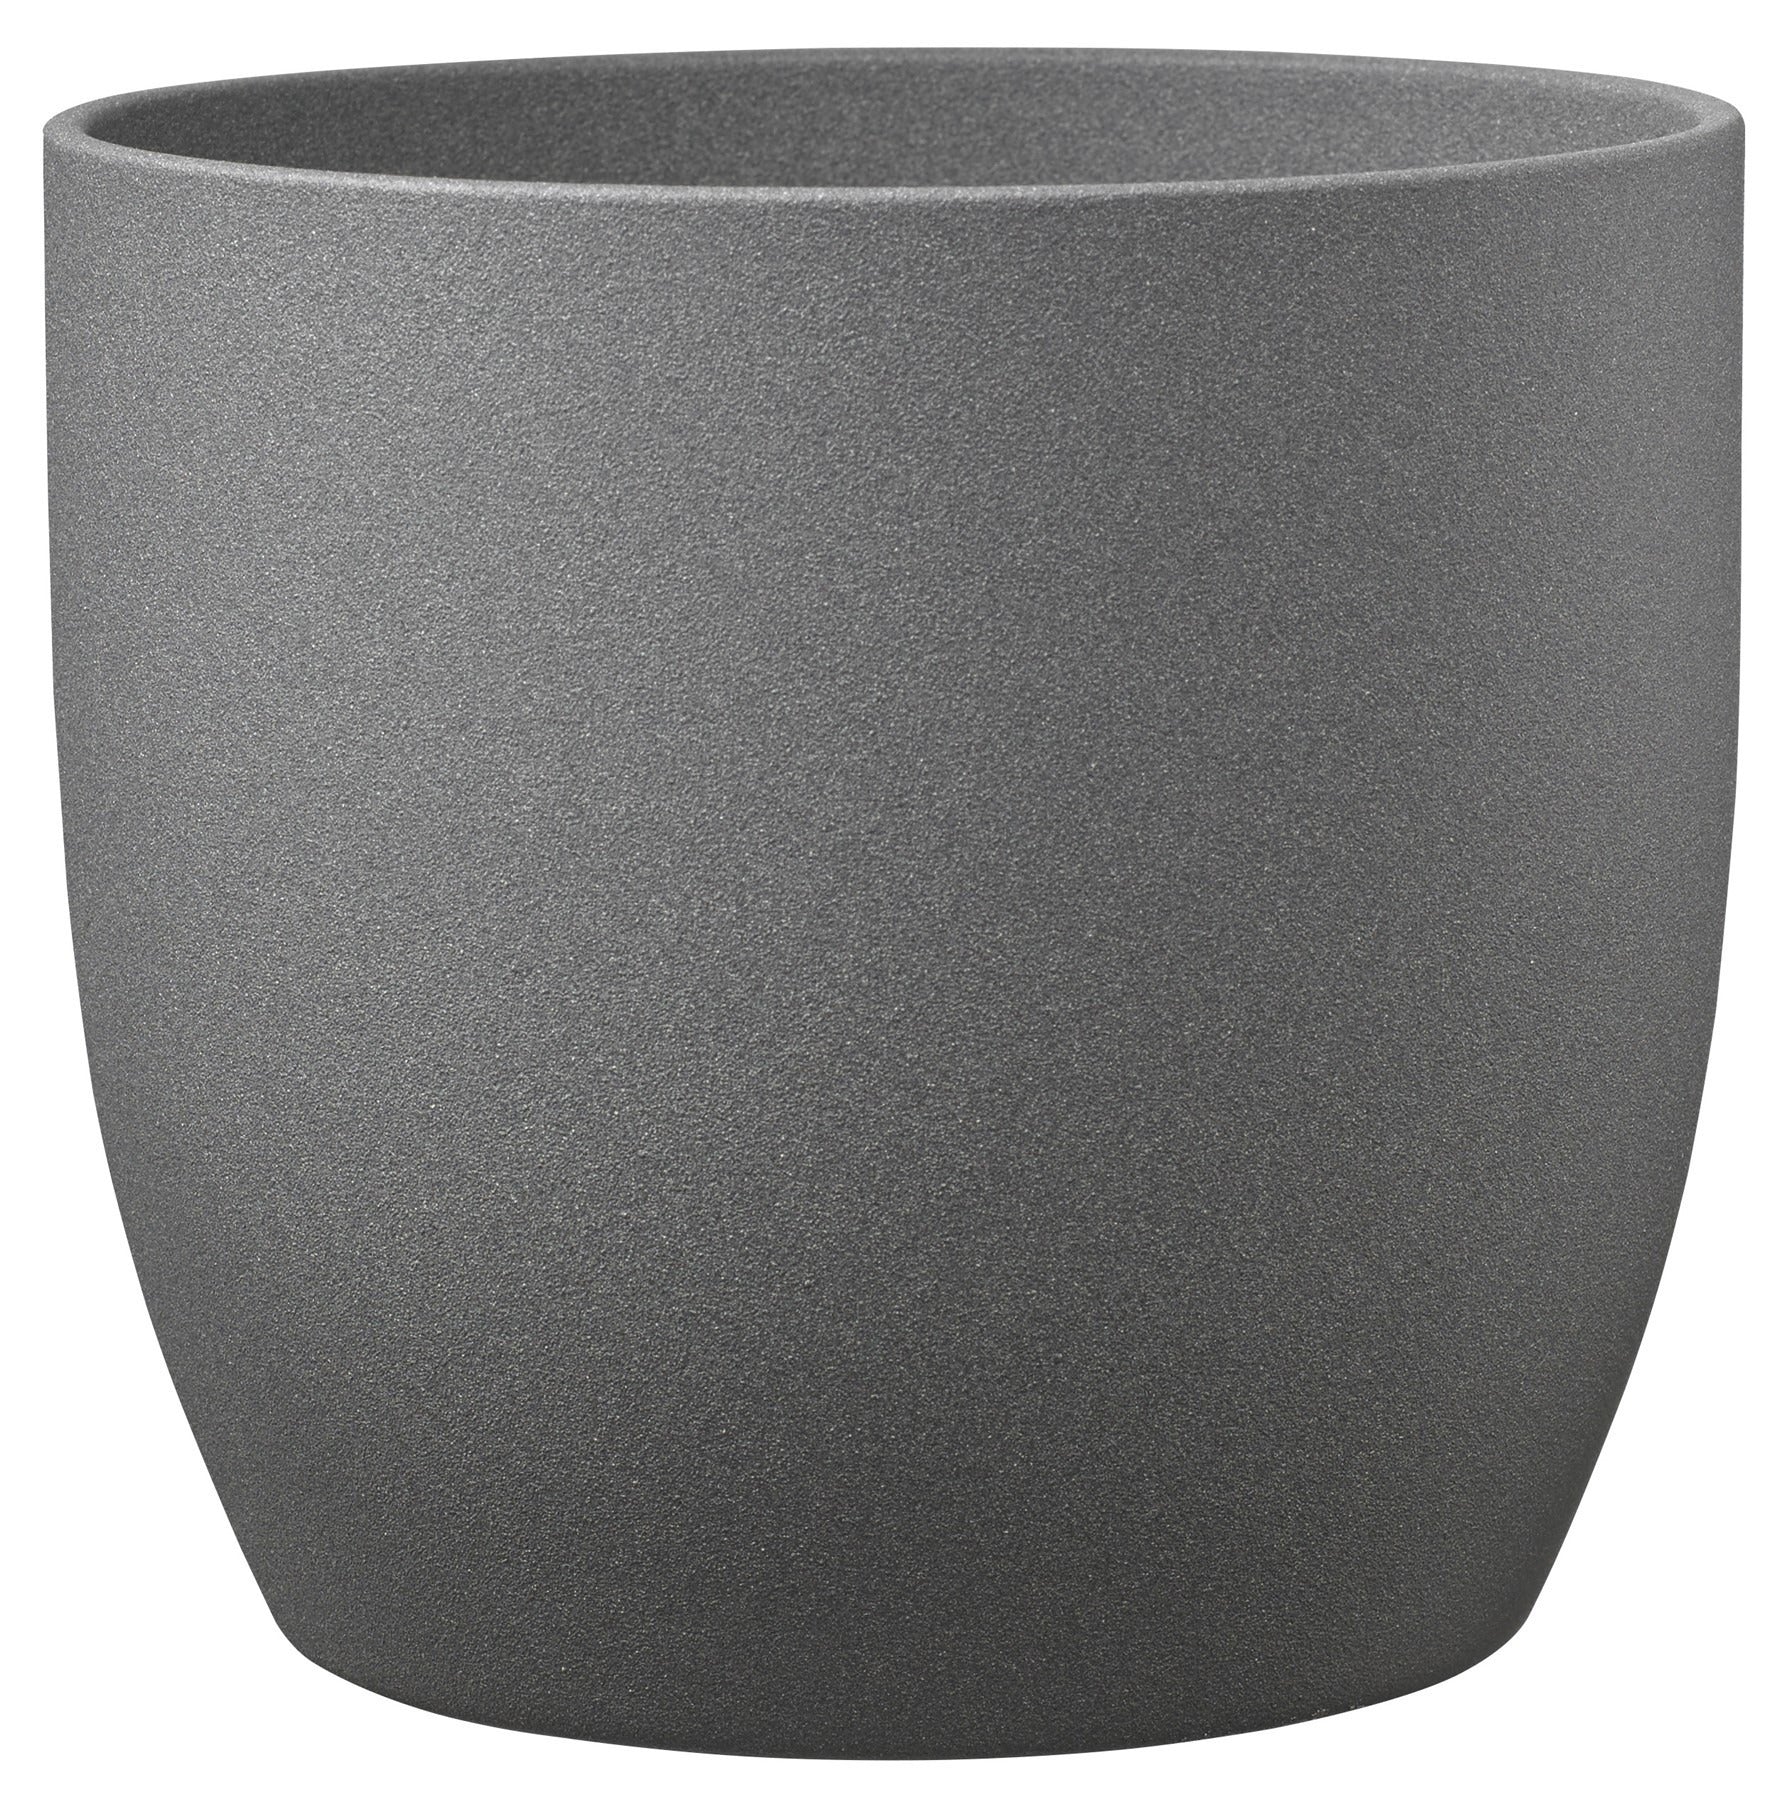 View Basel Stone Ceramic Pot Dark Grey 12cm information